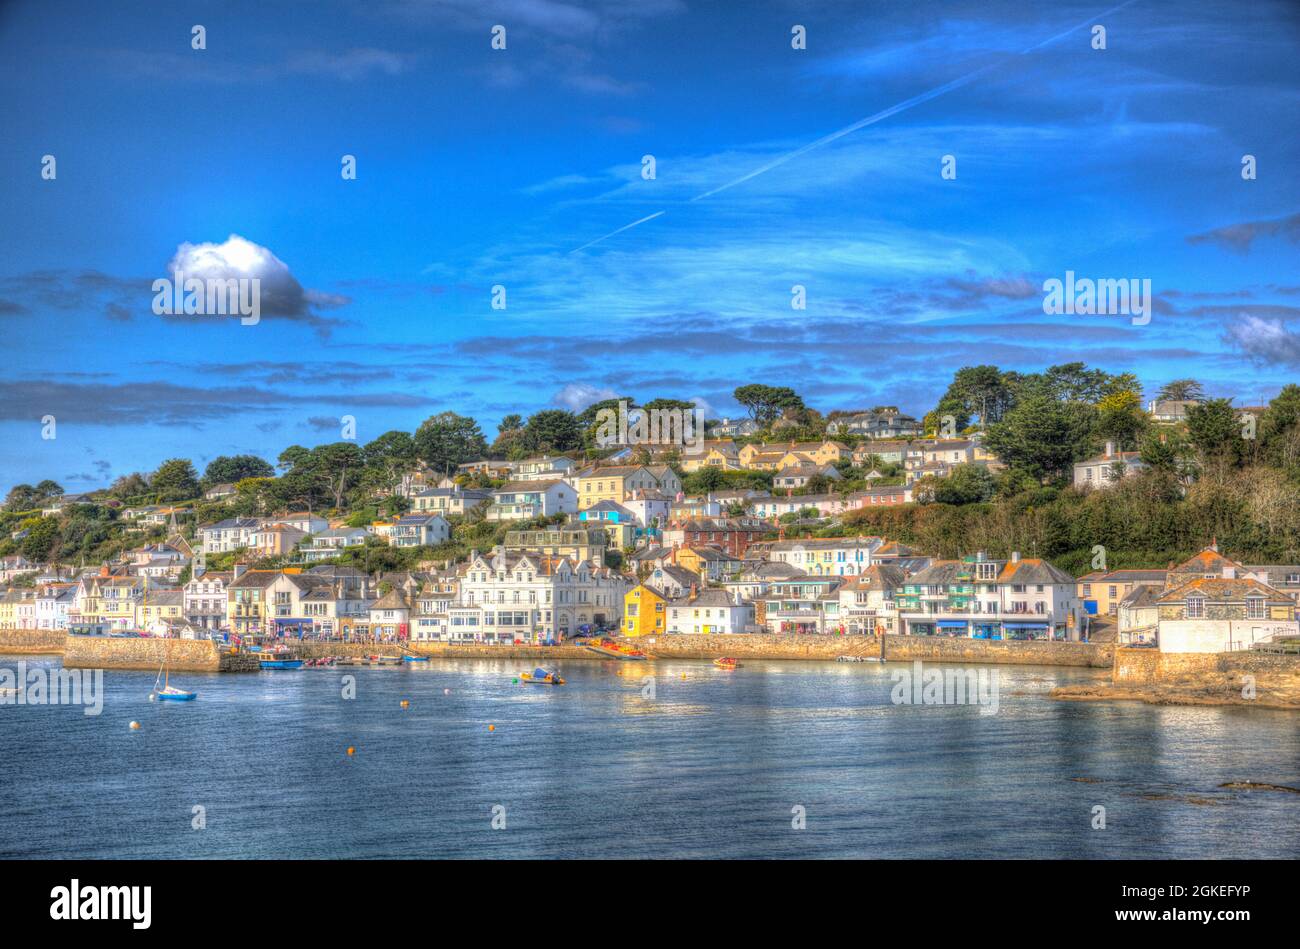 St Mawes Cornwall Roseland Peninsula town UK colourful HDR Stock Photo